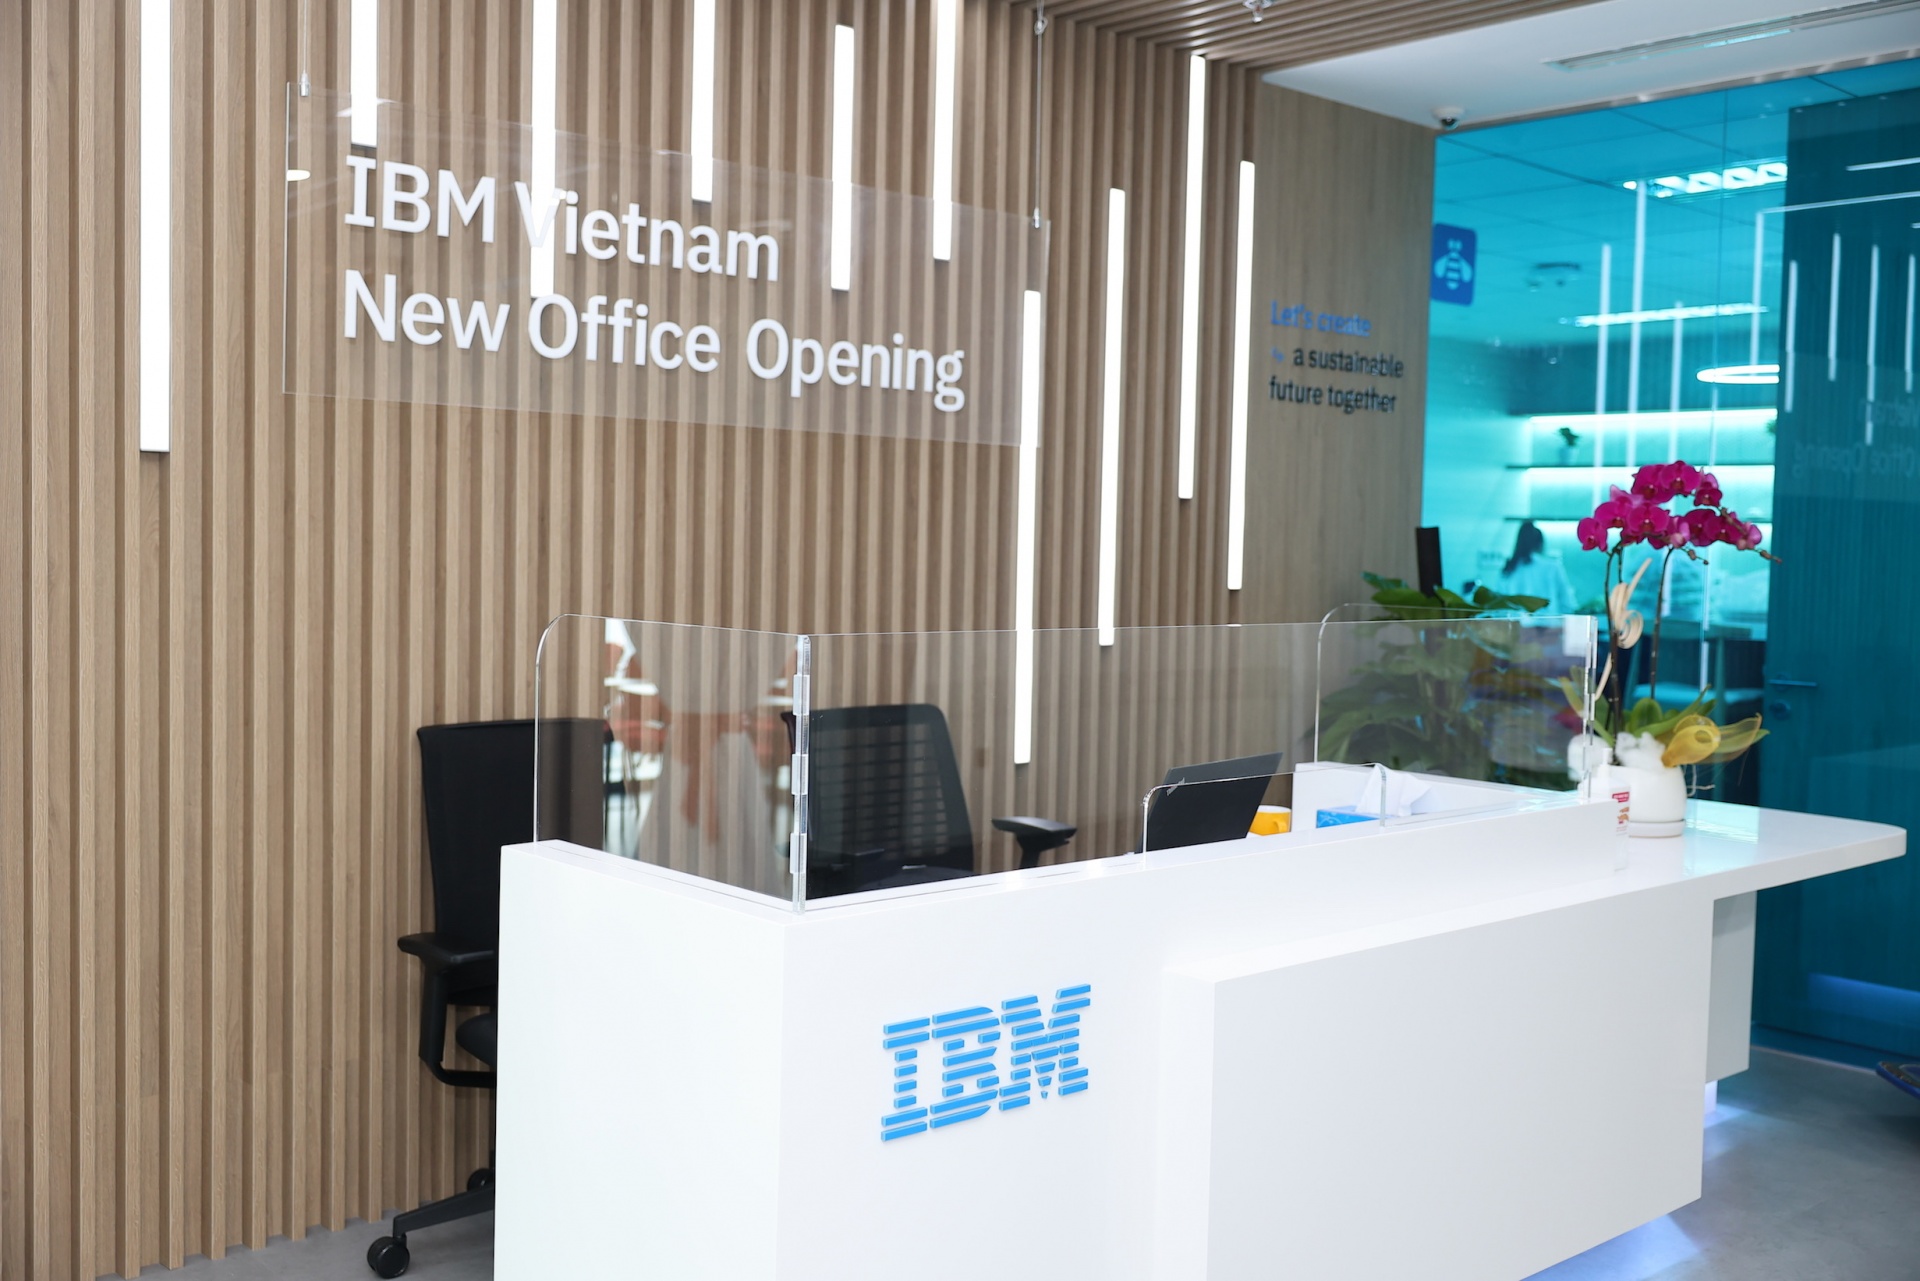 Vietnam businesses showcase ‘new era of innovation’ with IBM